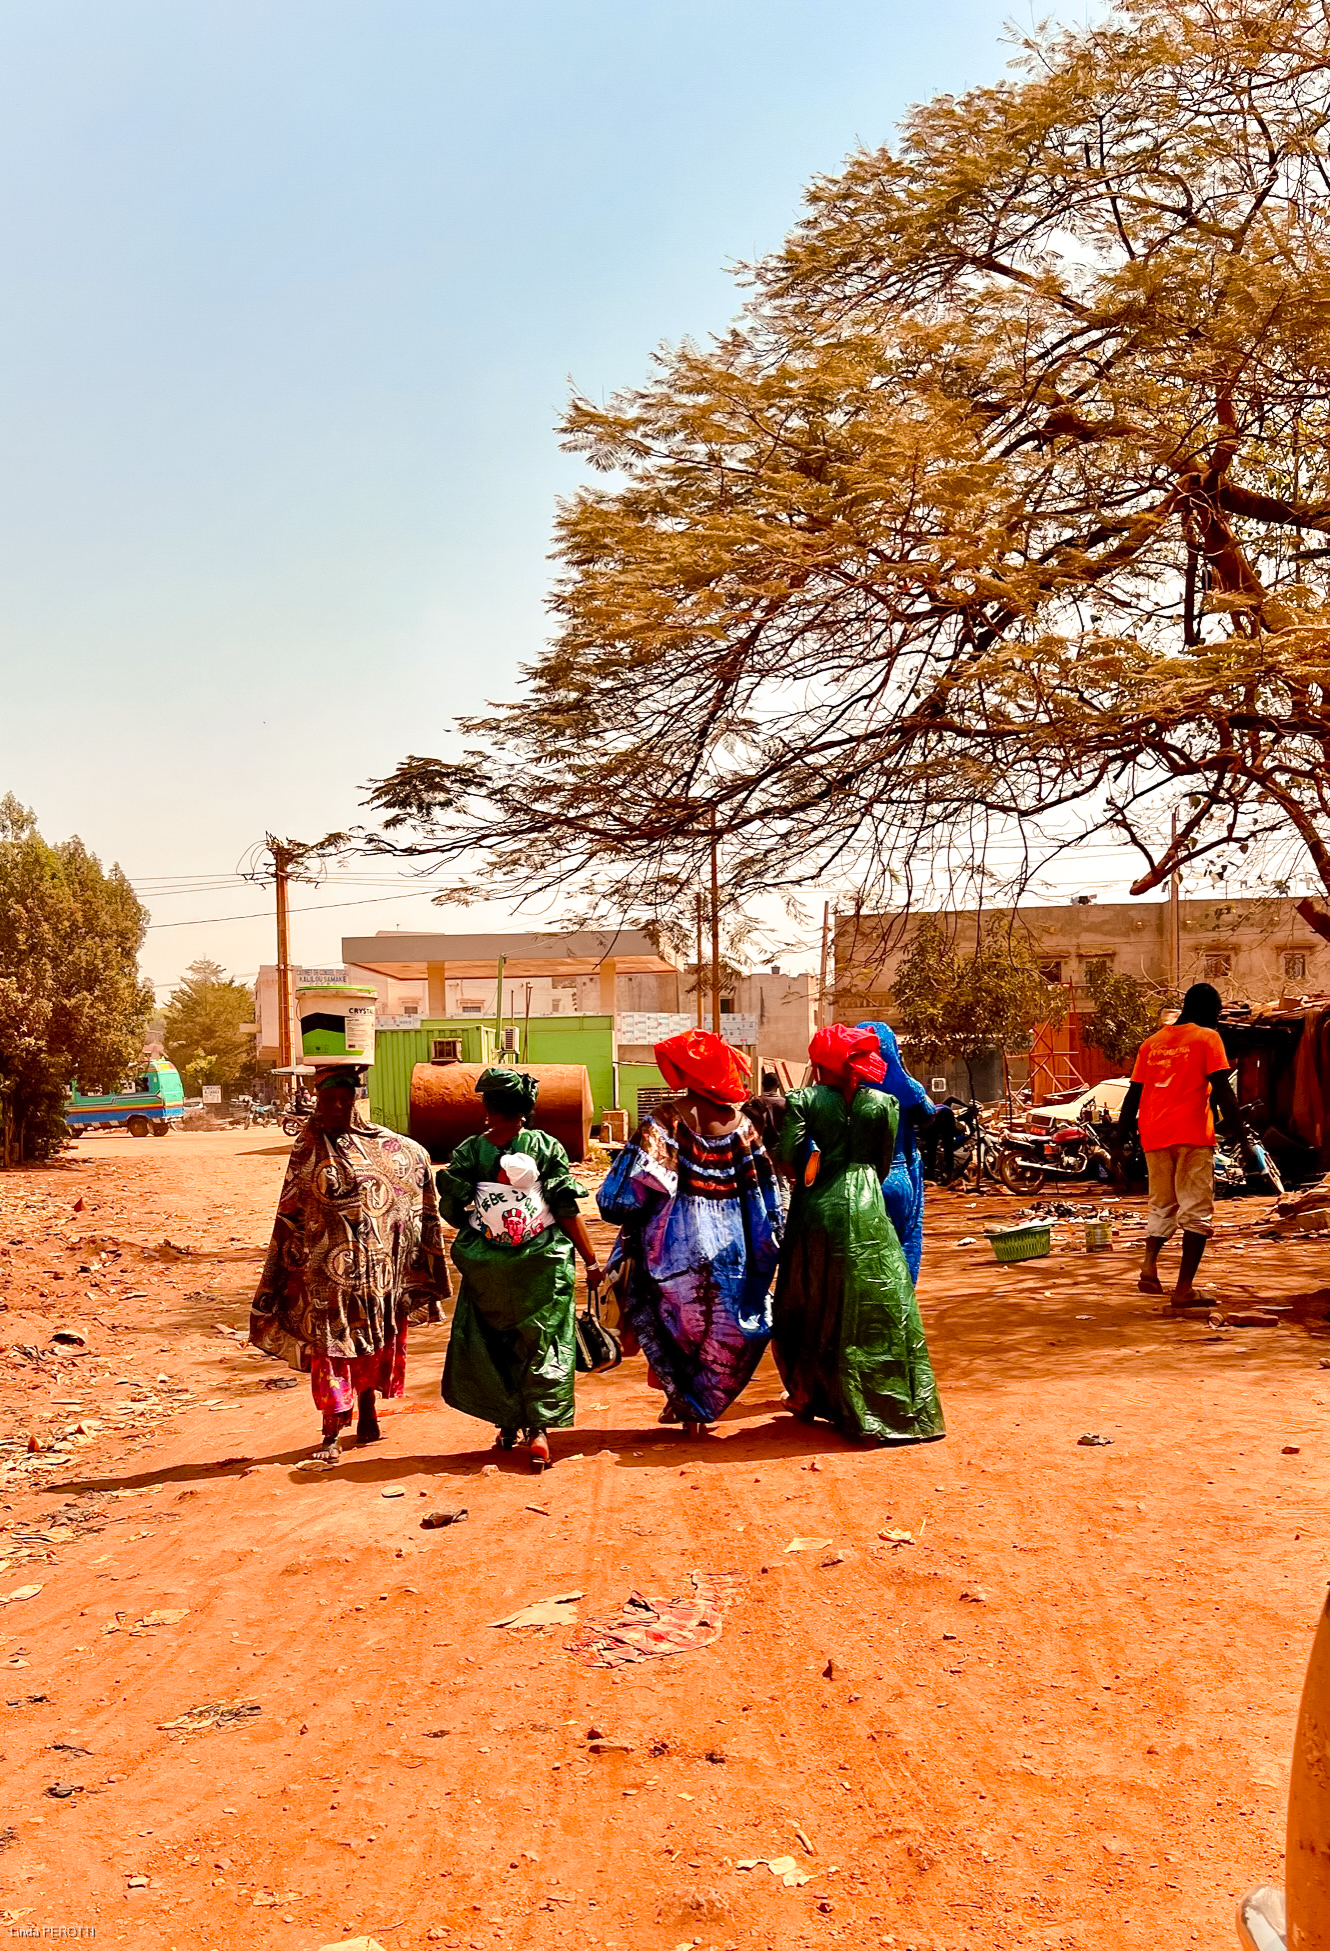 Pays d'Afrique à visiter : Visiter Bamako, les femmes de Bamako